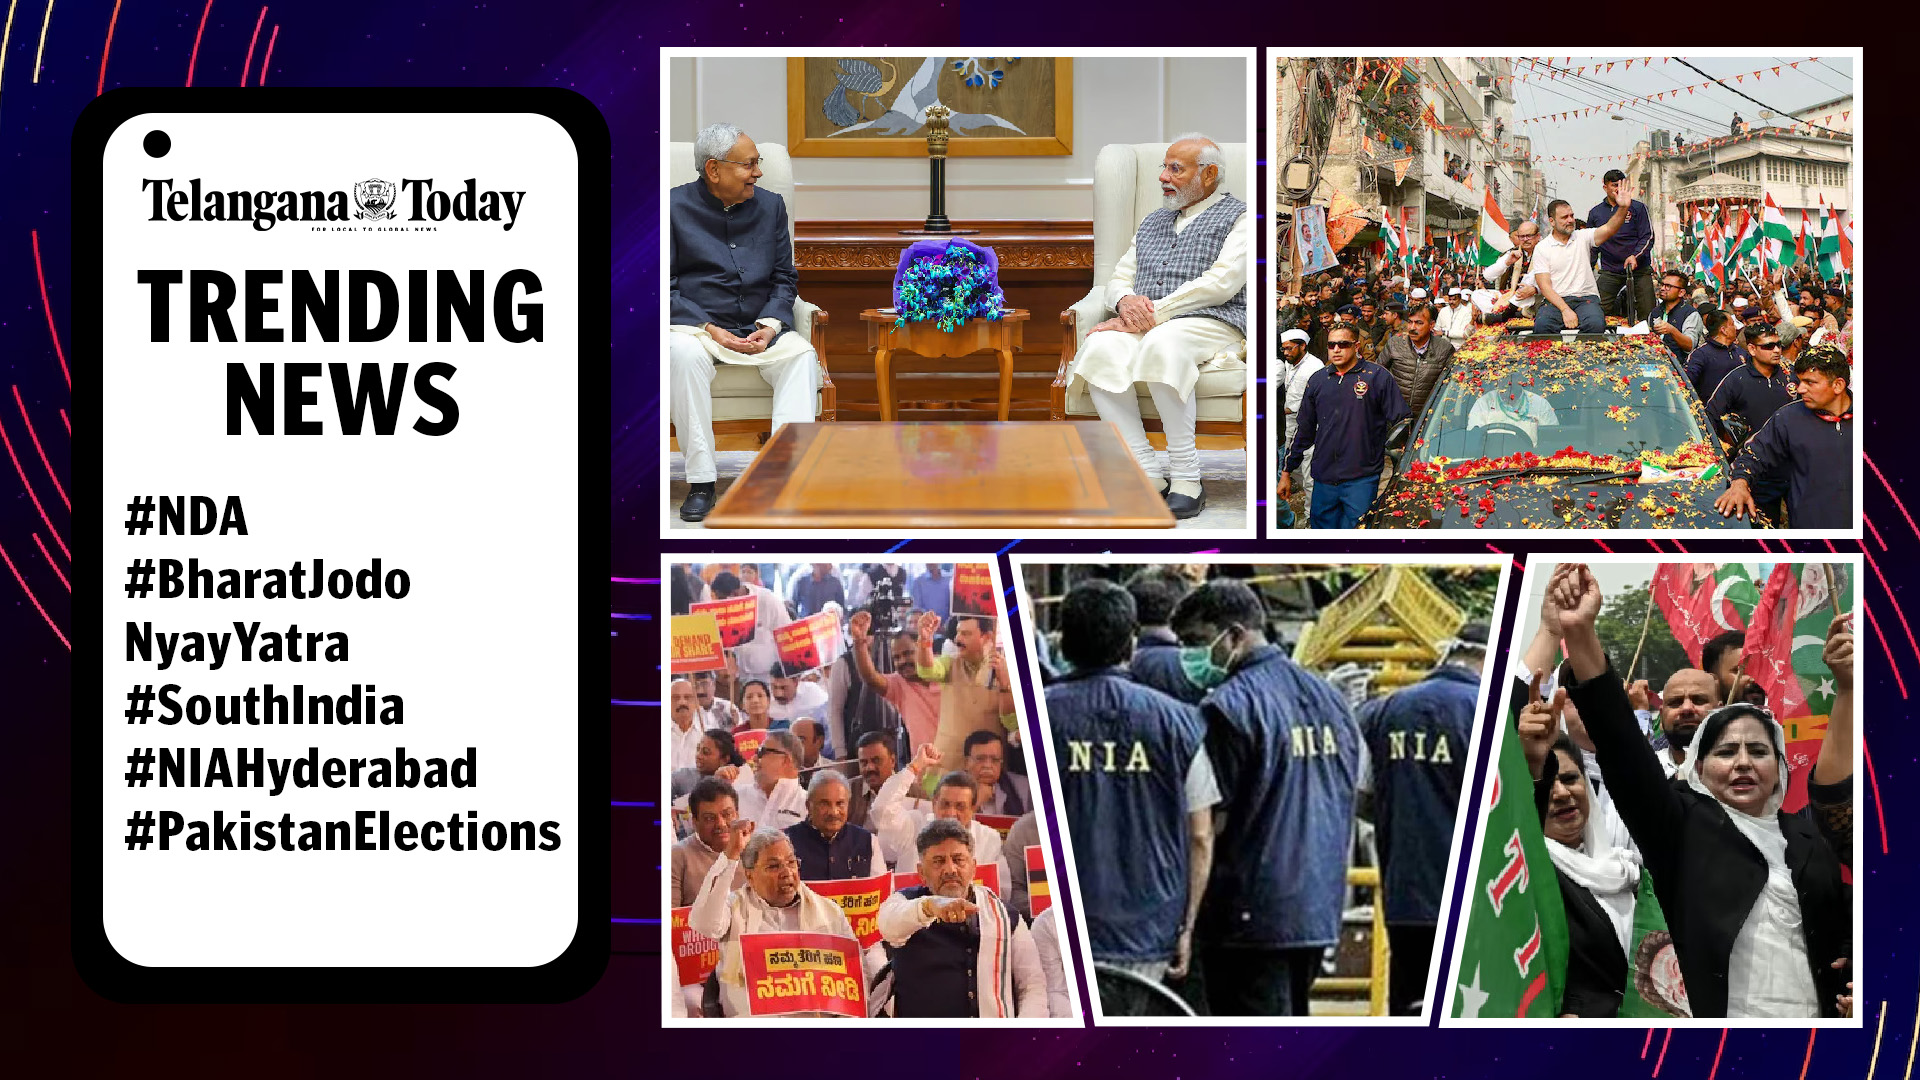 Trending News Today: NDA, Bharat Nyay Jodo Yatra, South India, NIA, Pakistan Elections